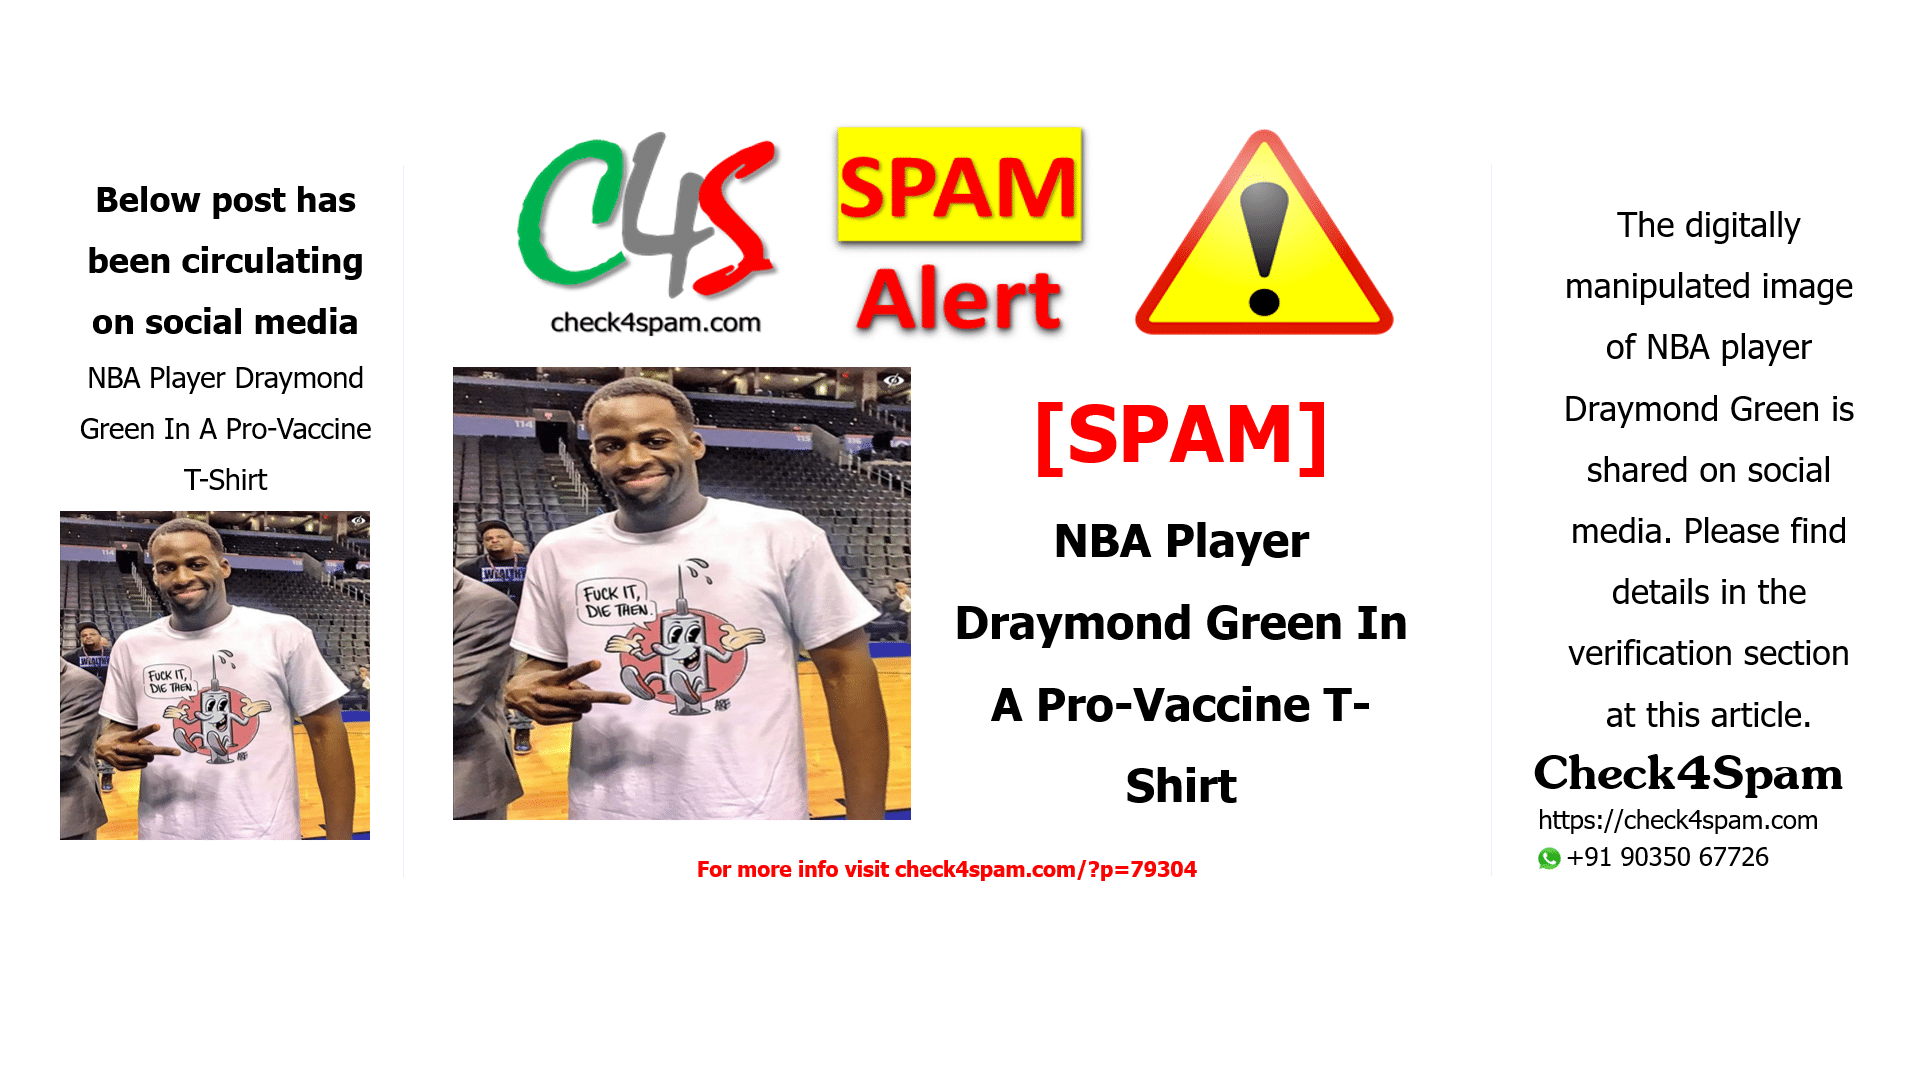 NBA Player Draymond Green In A Pro-Vaccine T-Shirt